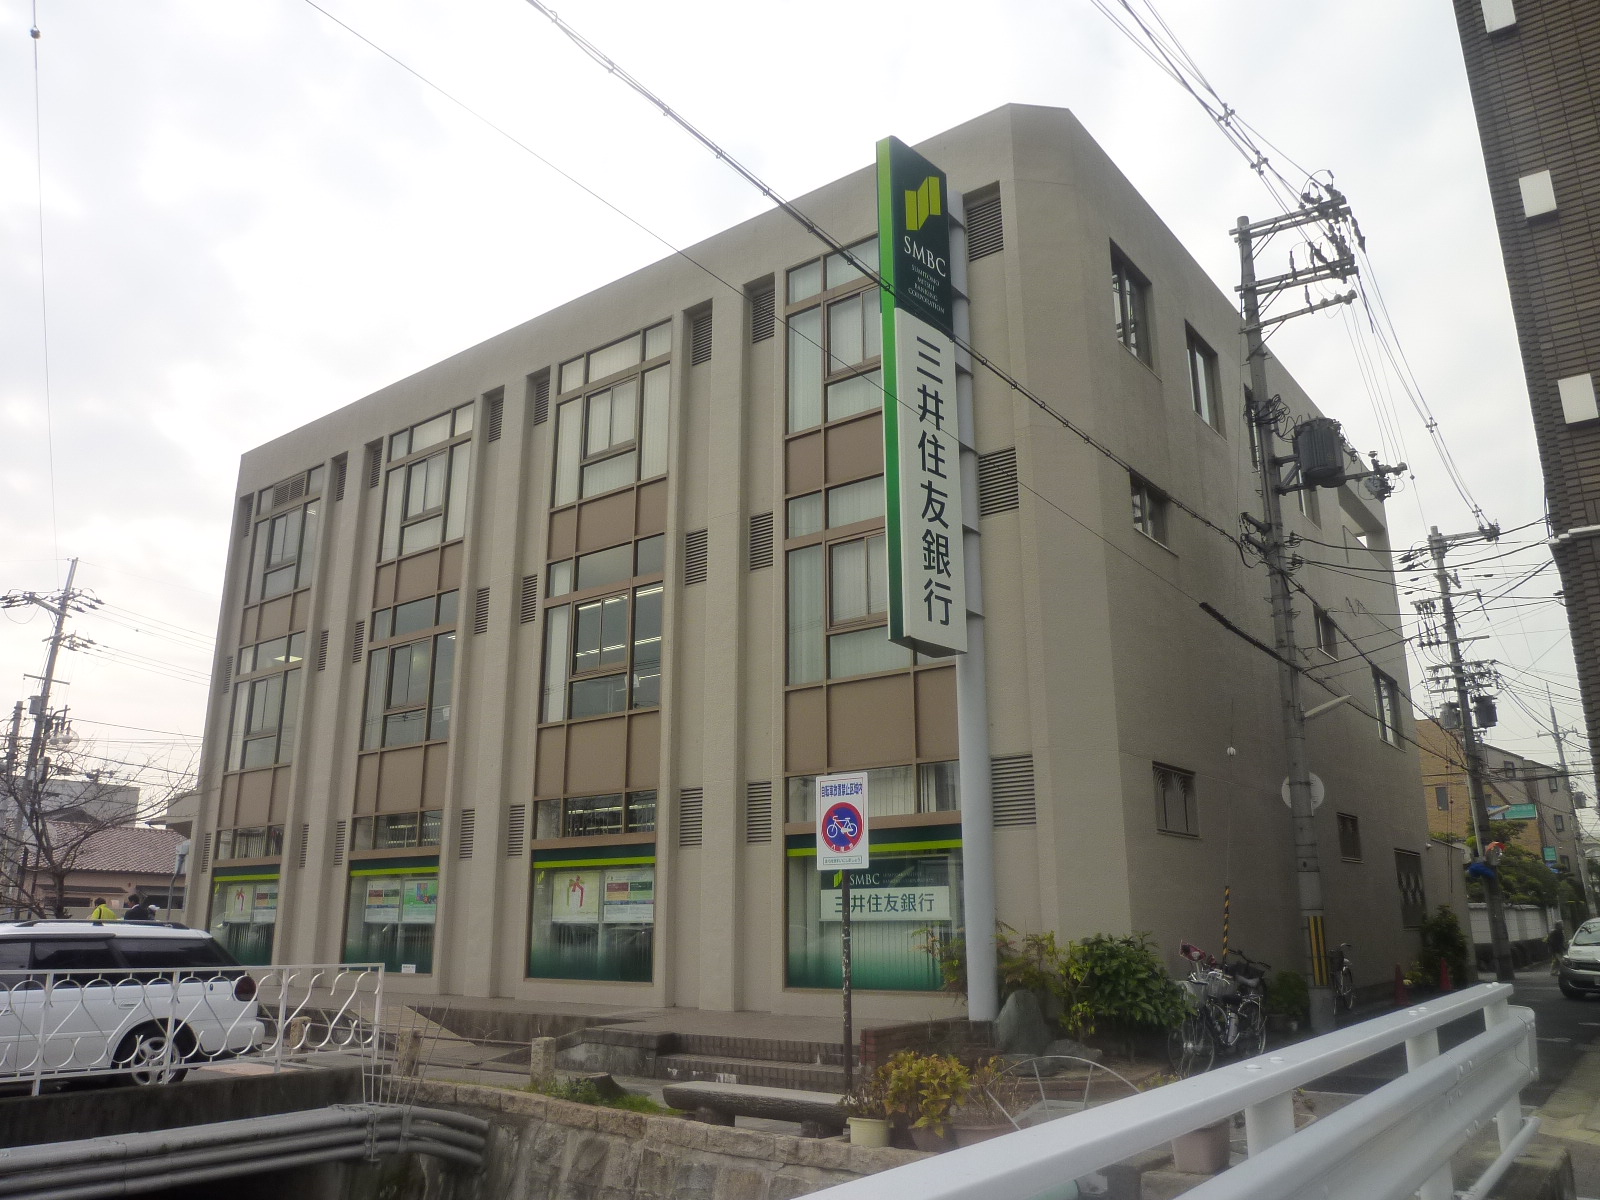 Bank. 322m to Sumitomo Mitsui Banking Corporation Yamamoto Branch (Bank)